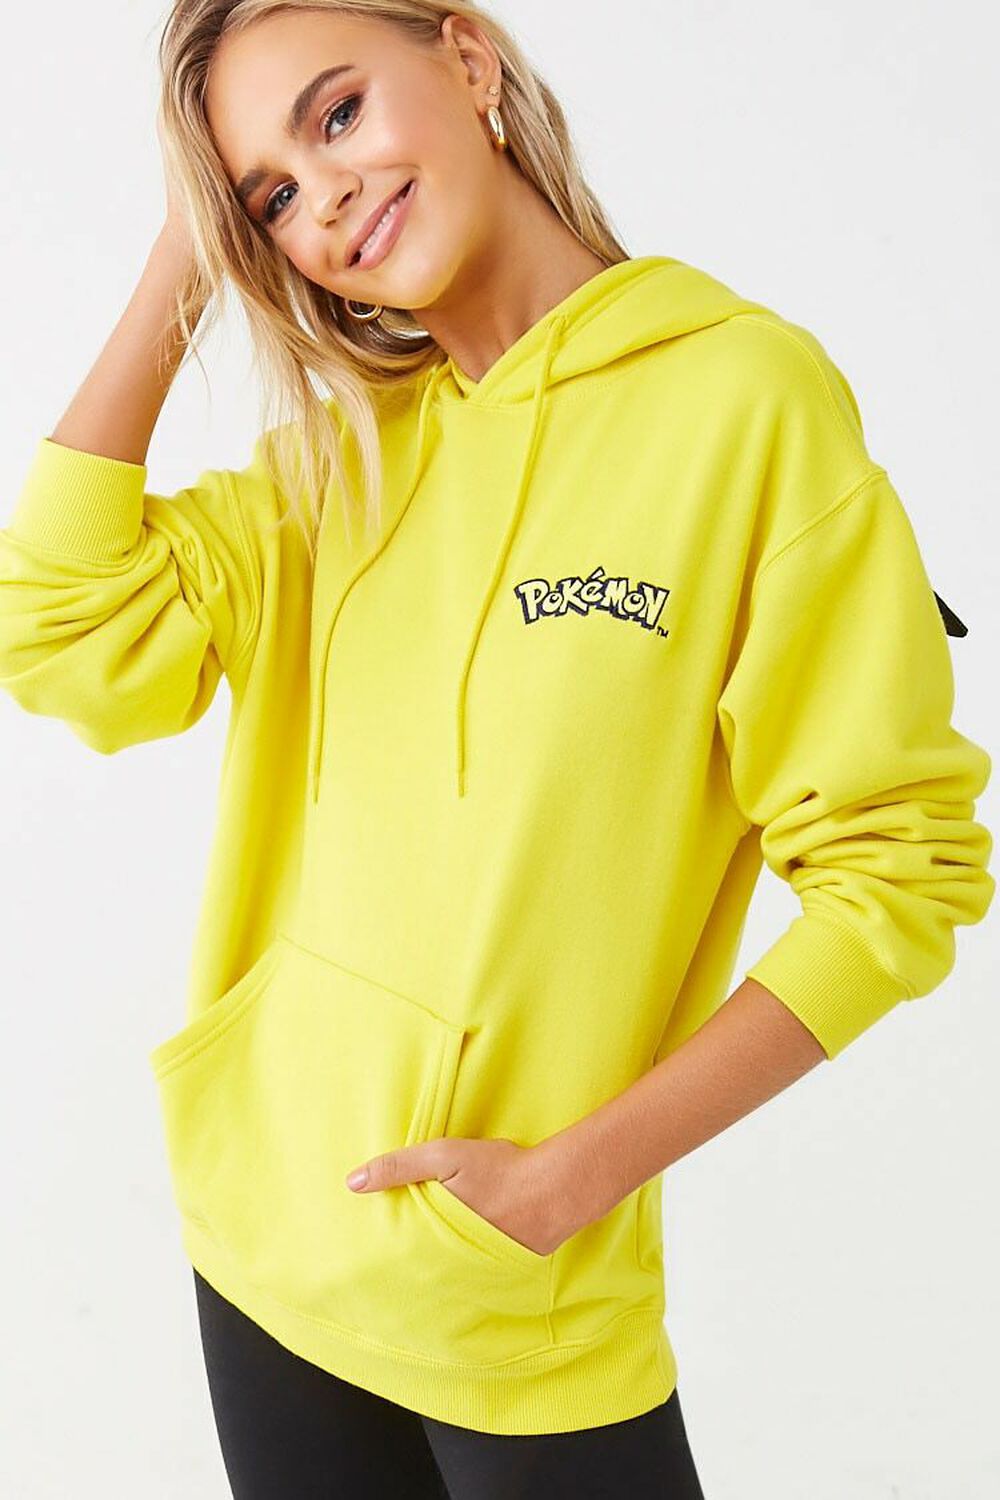 Gucci Pikachu Pokemon Unisex Hoodie For Men Women Luxury Brand Clothing  Clothes HT - Zip Up Hoodie